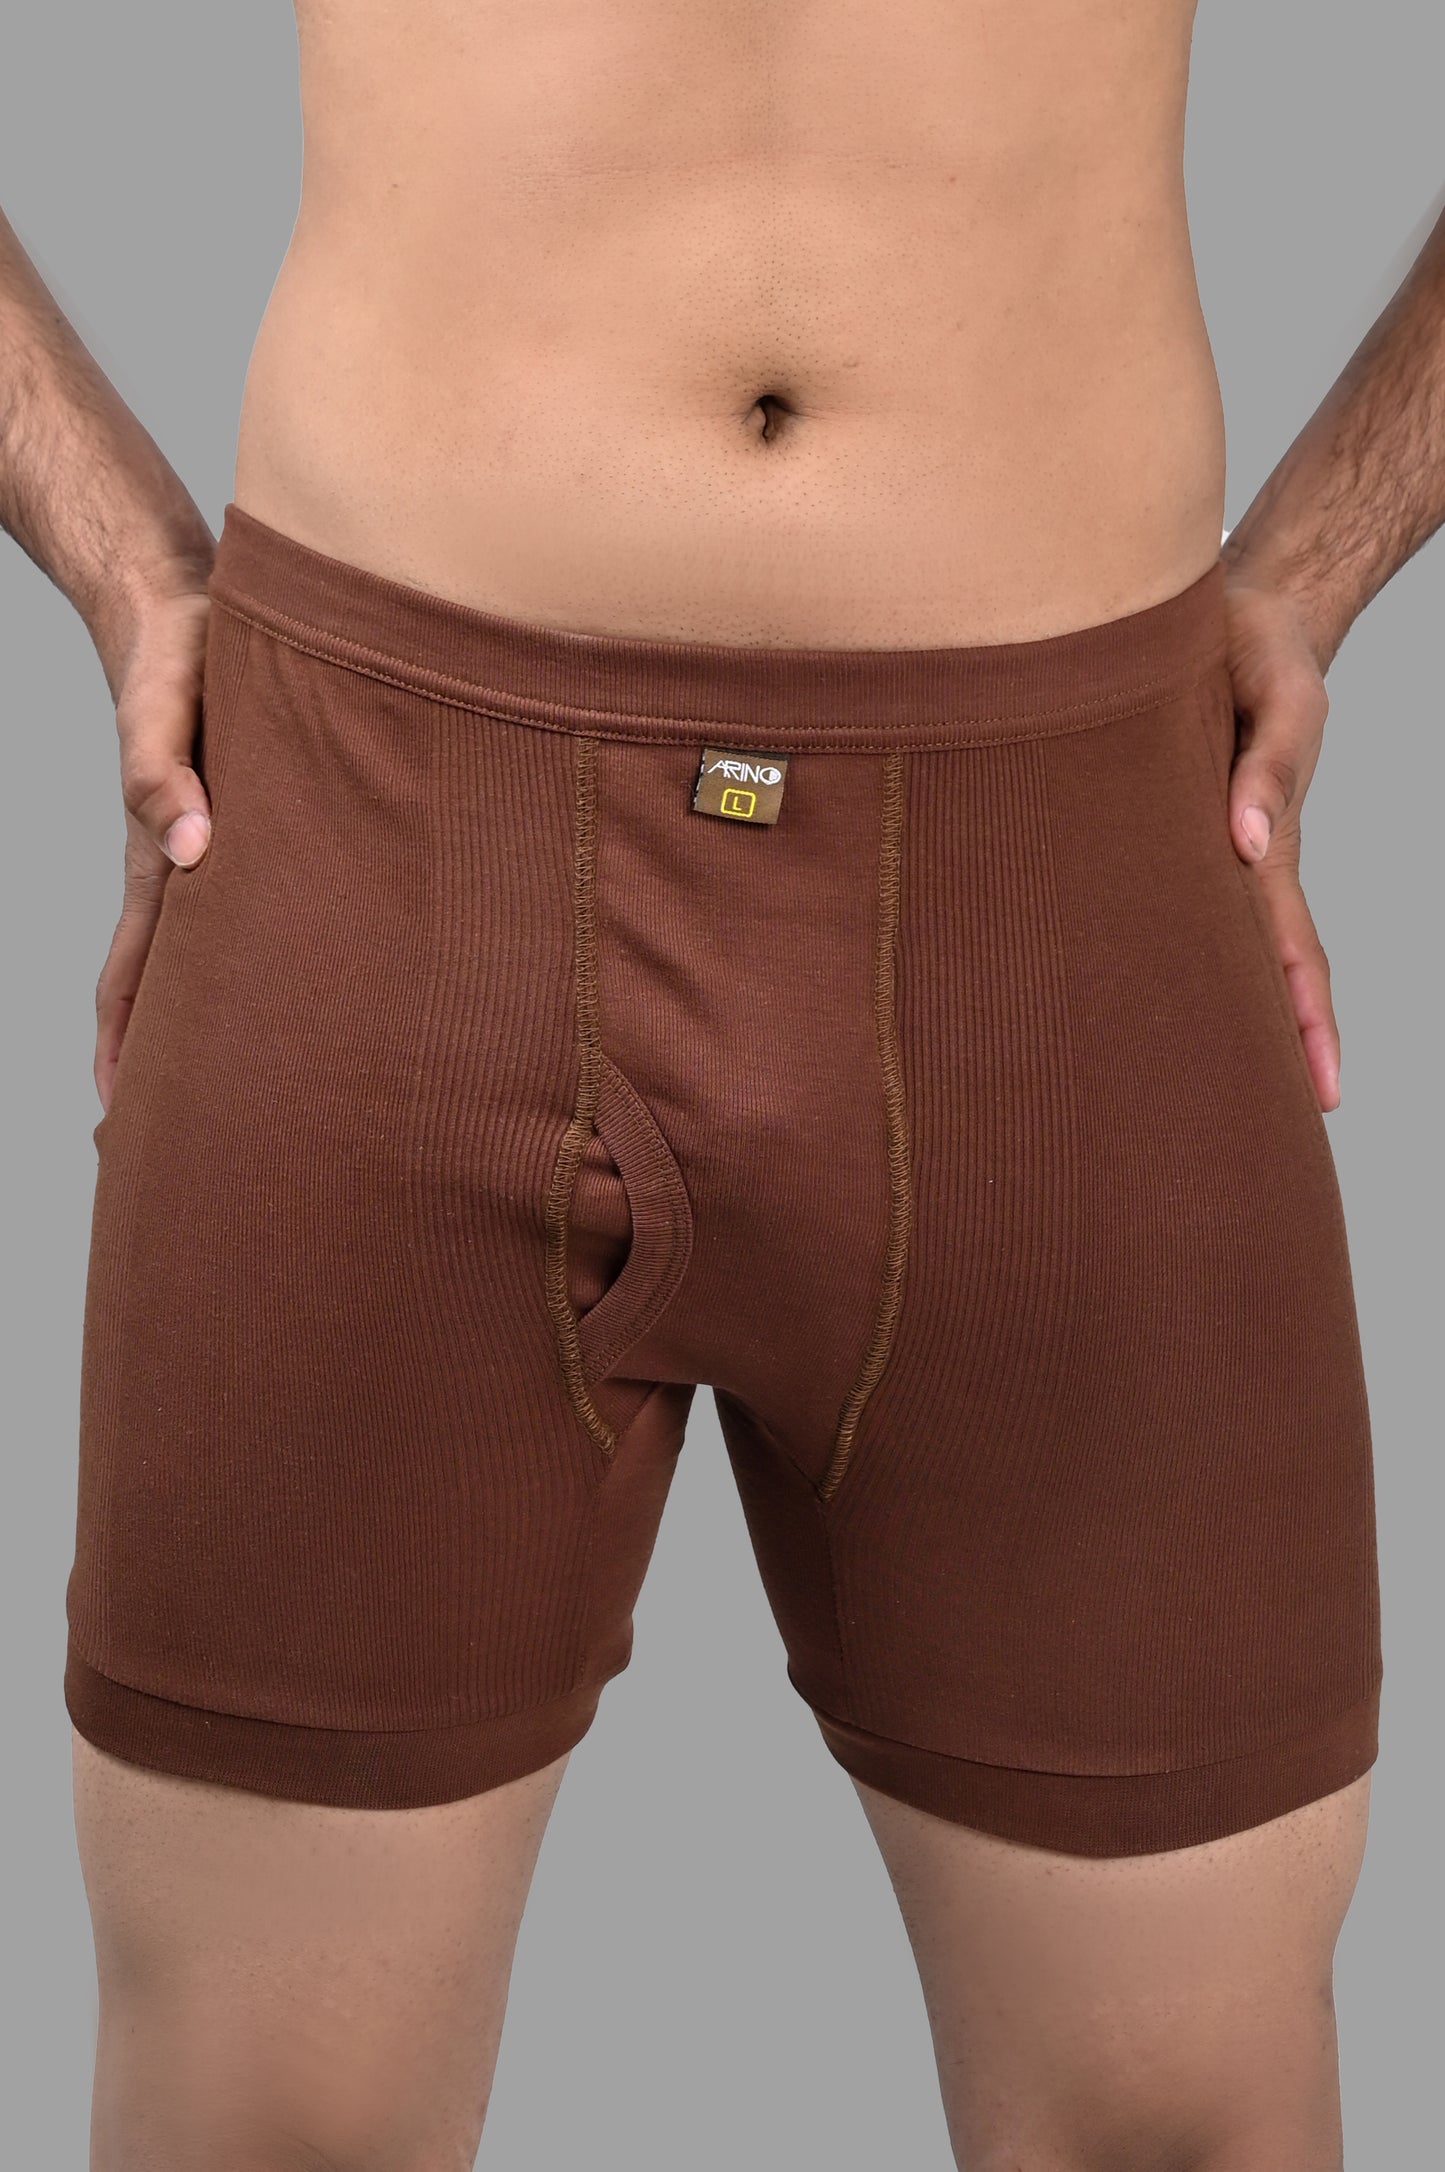 ARINO® Brown Rib Men's Boxer Shorts